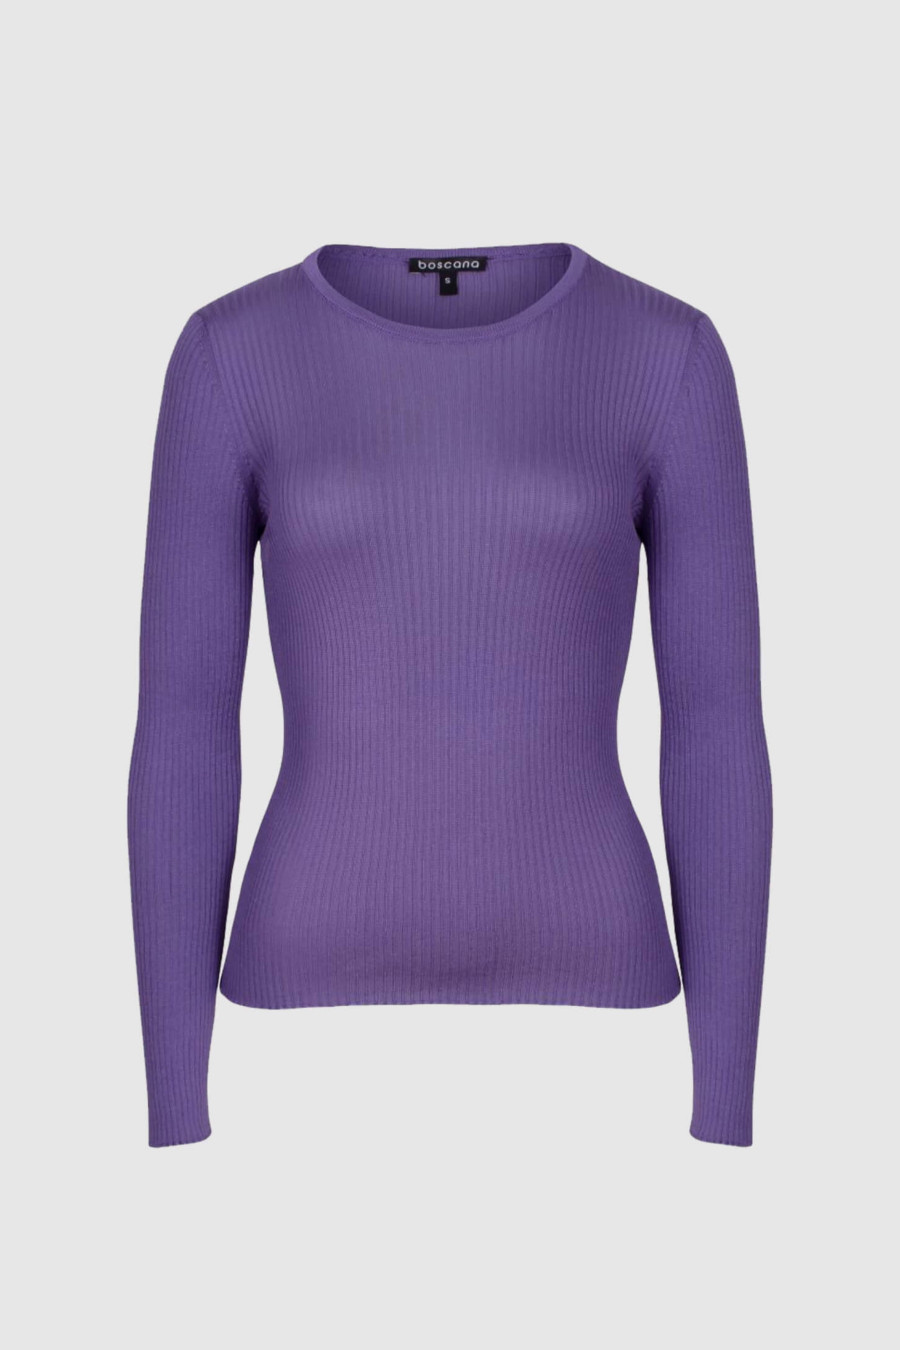 Pure silk knit sweater in Dahlia Purple